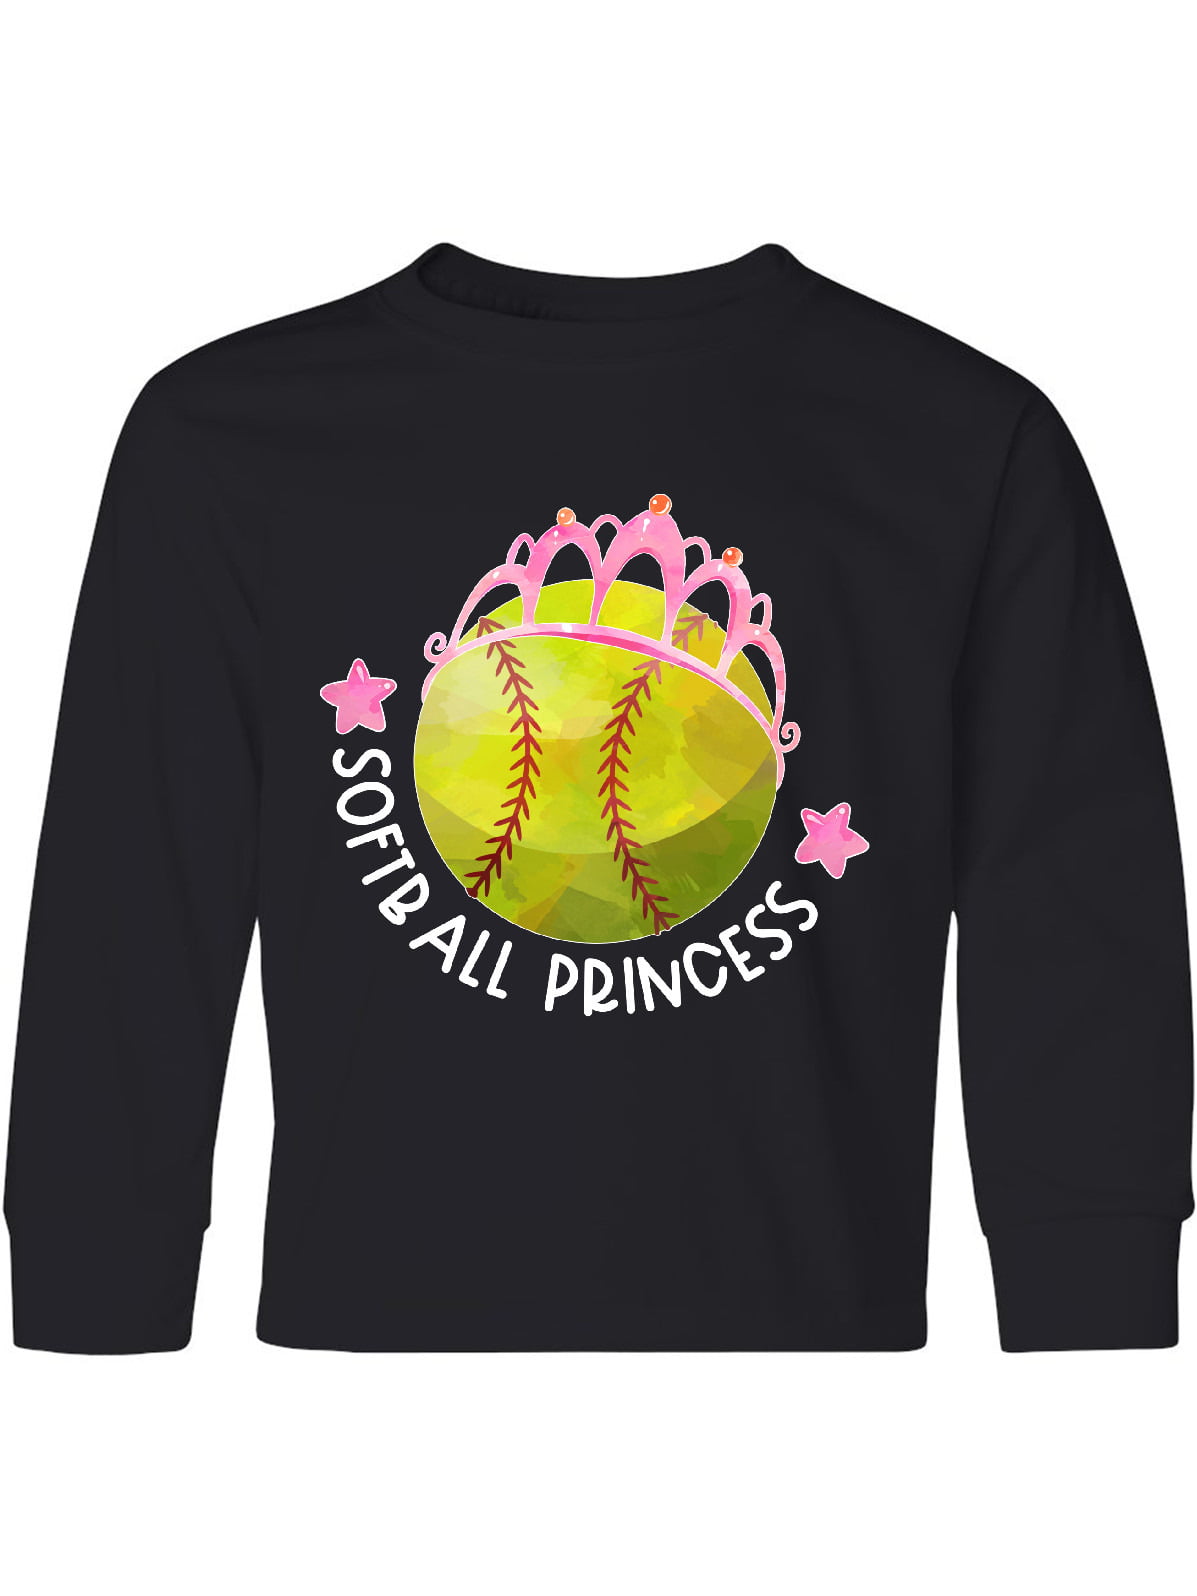 Softball Sweatshirt for Athletic Teen Girls SOFTBALL